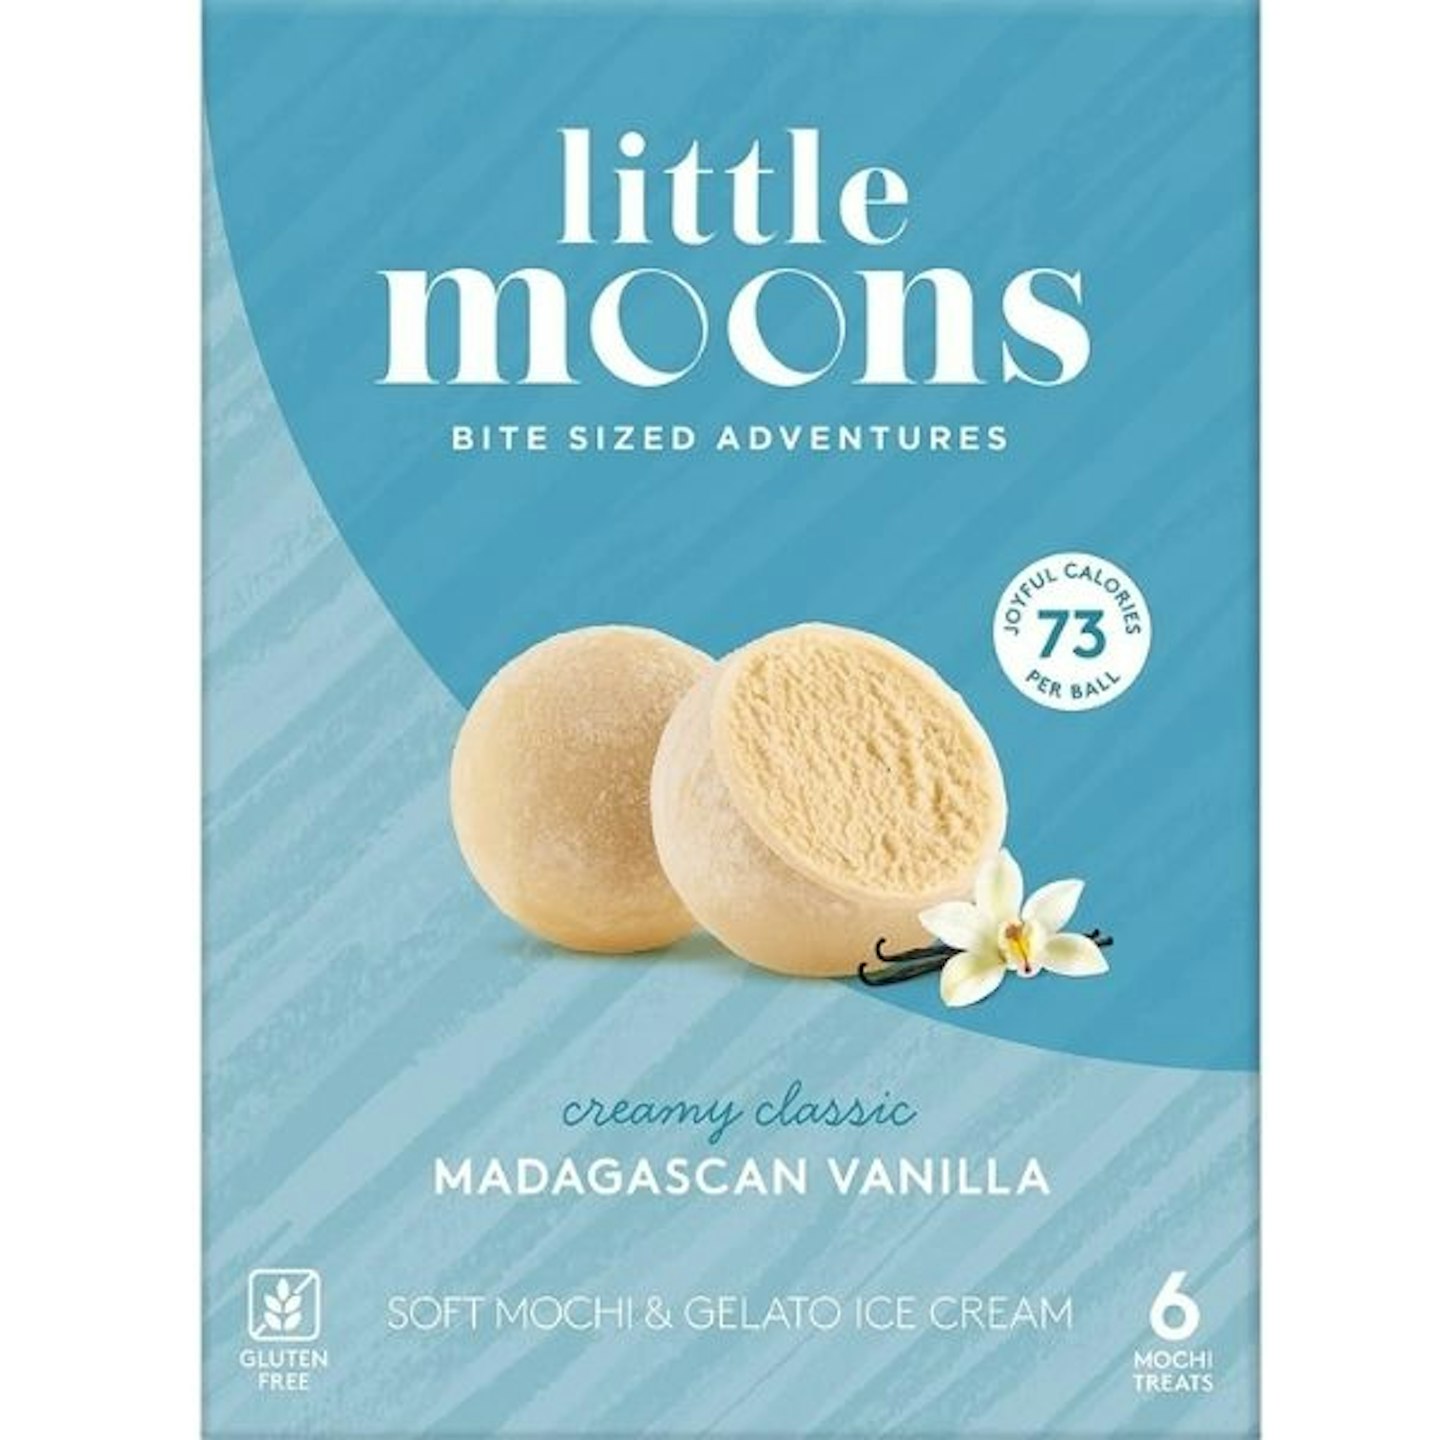 Little Moons Madagascan Vanilla